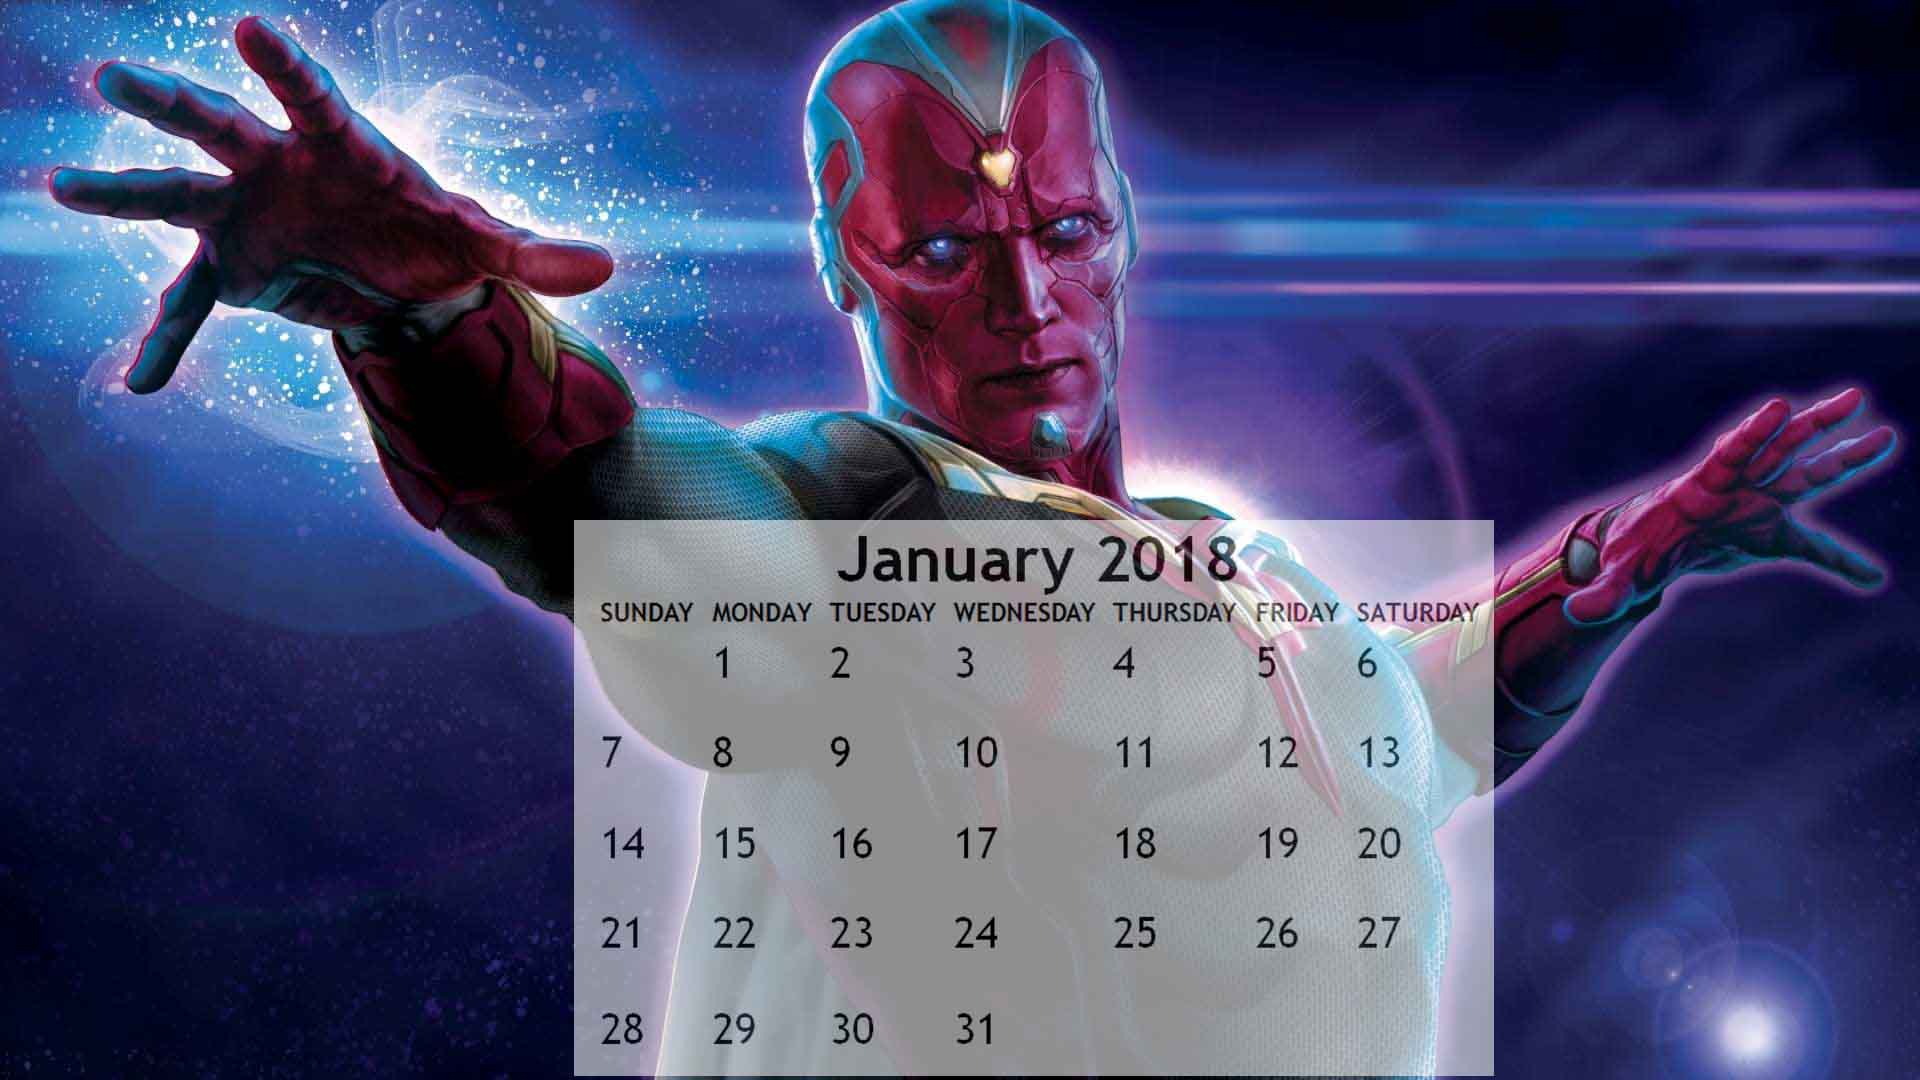 January 2018 Marvel Superheroes Printable Calendar 1920x1080